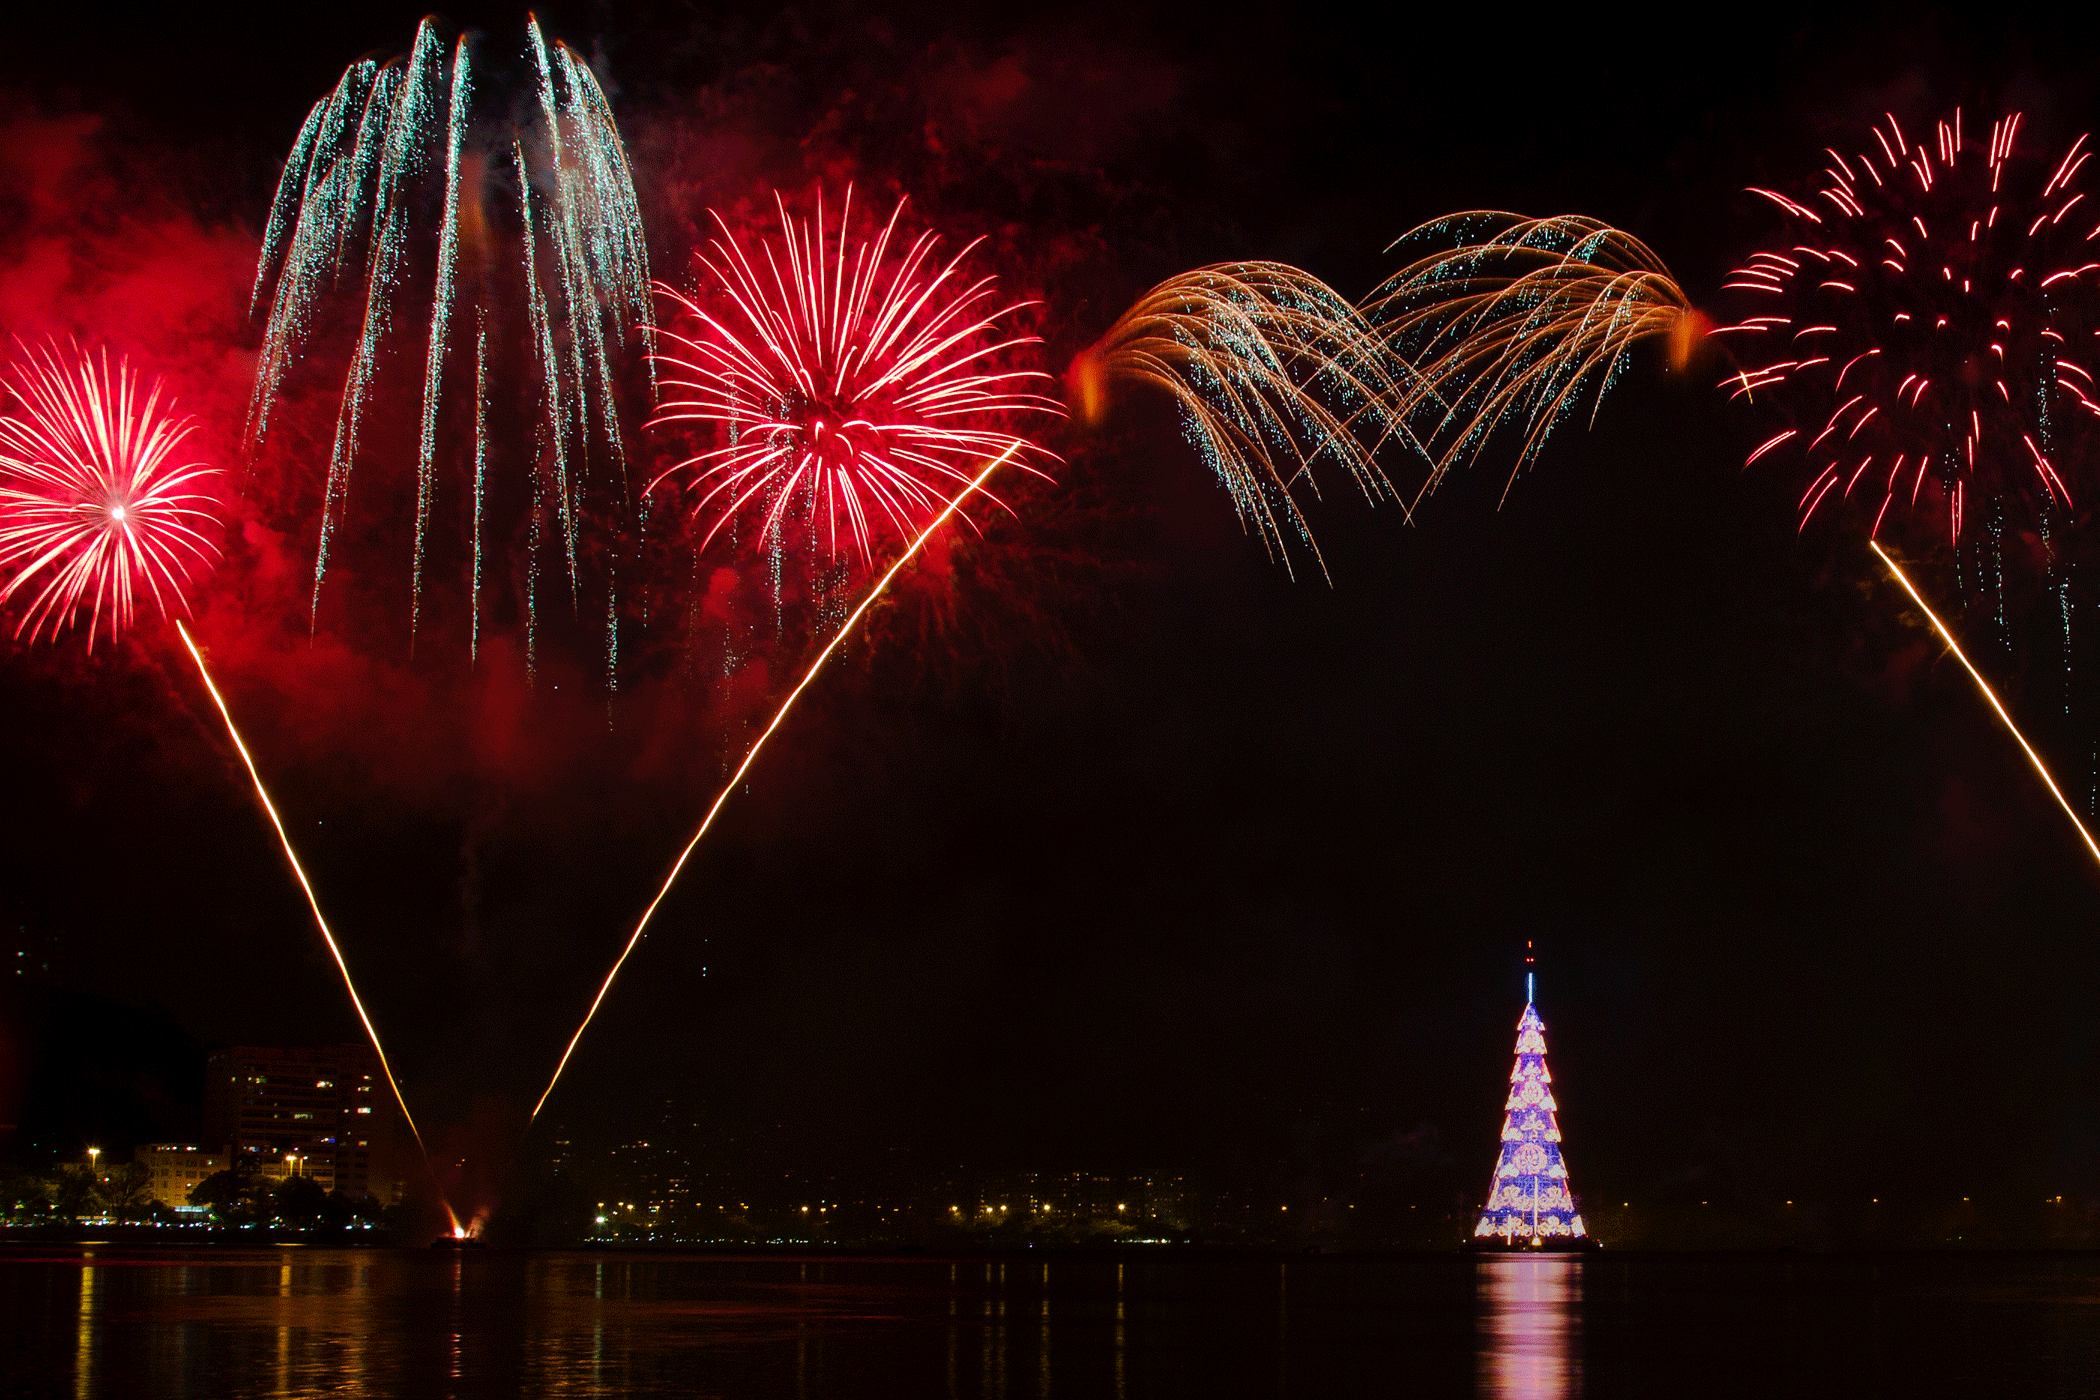 Fireworks explode over the floating Christmas tree at the Rodrigo de Freitas Lagoon in Rio de Janeiro on Dec. 12, 2015. (AP Photo/Silvia Izquierdo)